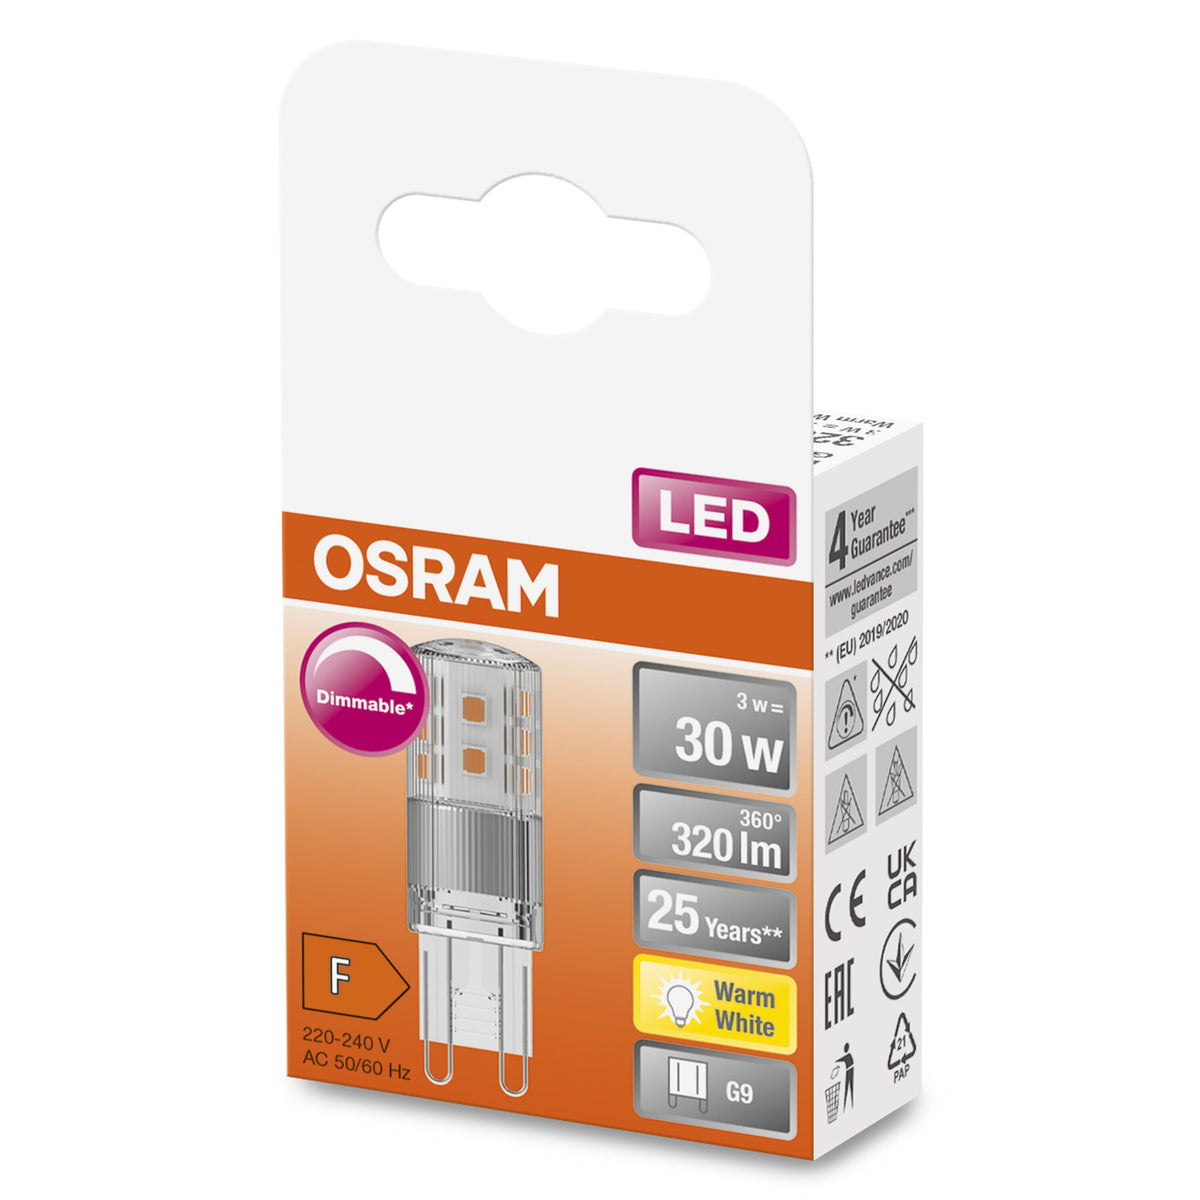 OSRAM Lampe LED PIN à intensité variable claire (ex 30W) 3W / 2700K blanc chaud PIN G9